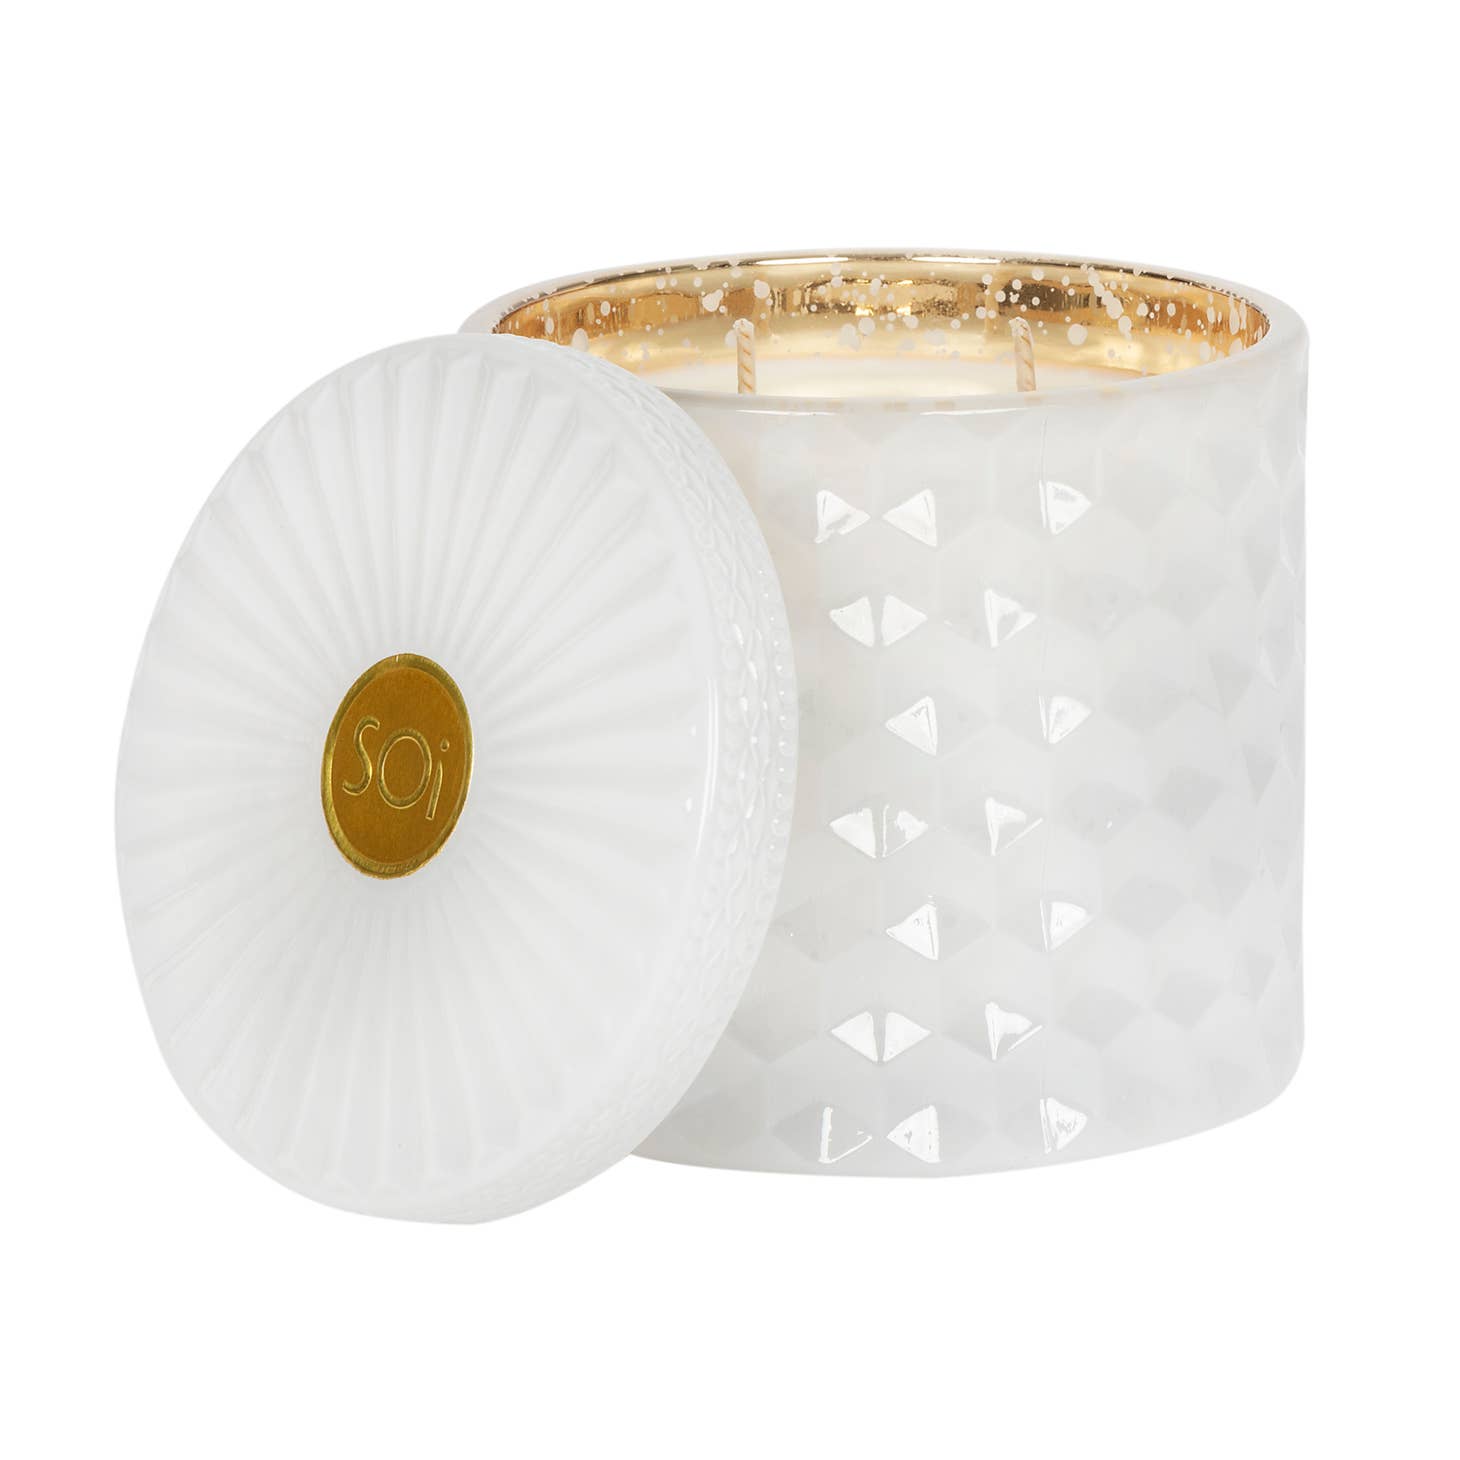 SOi Company: Winter Wonderland 15oz Shimmer Candle (White)